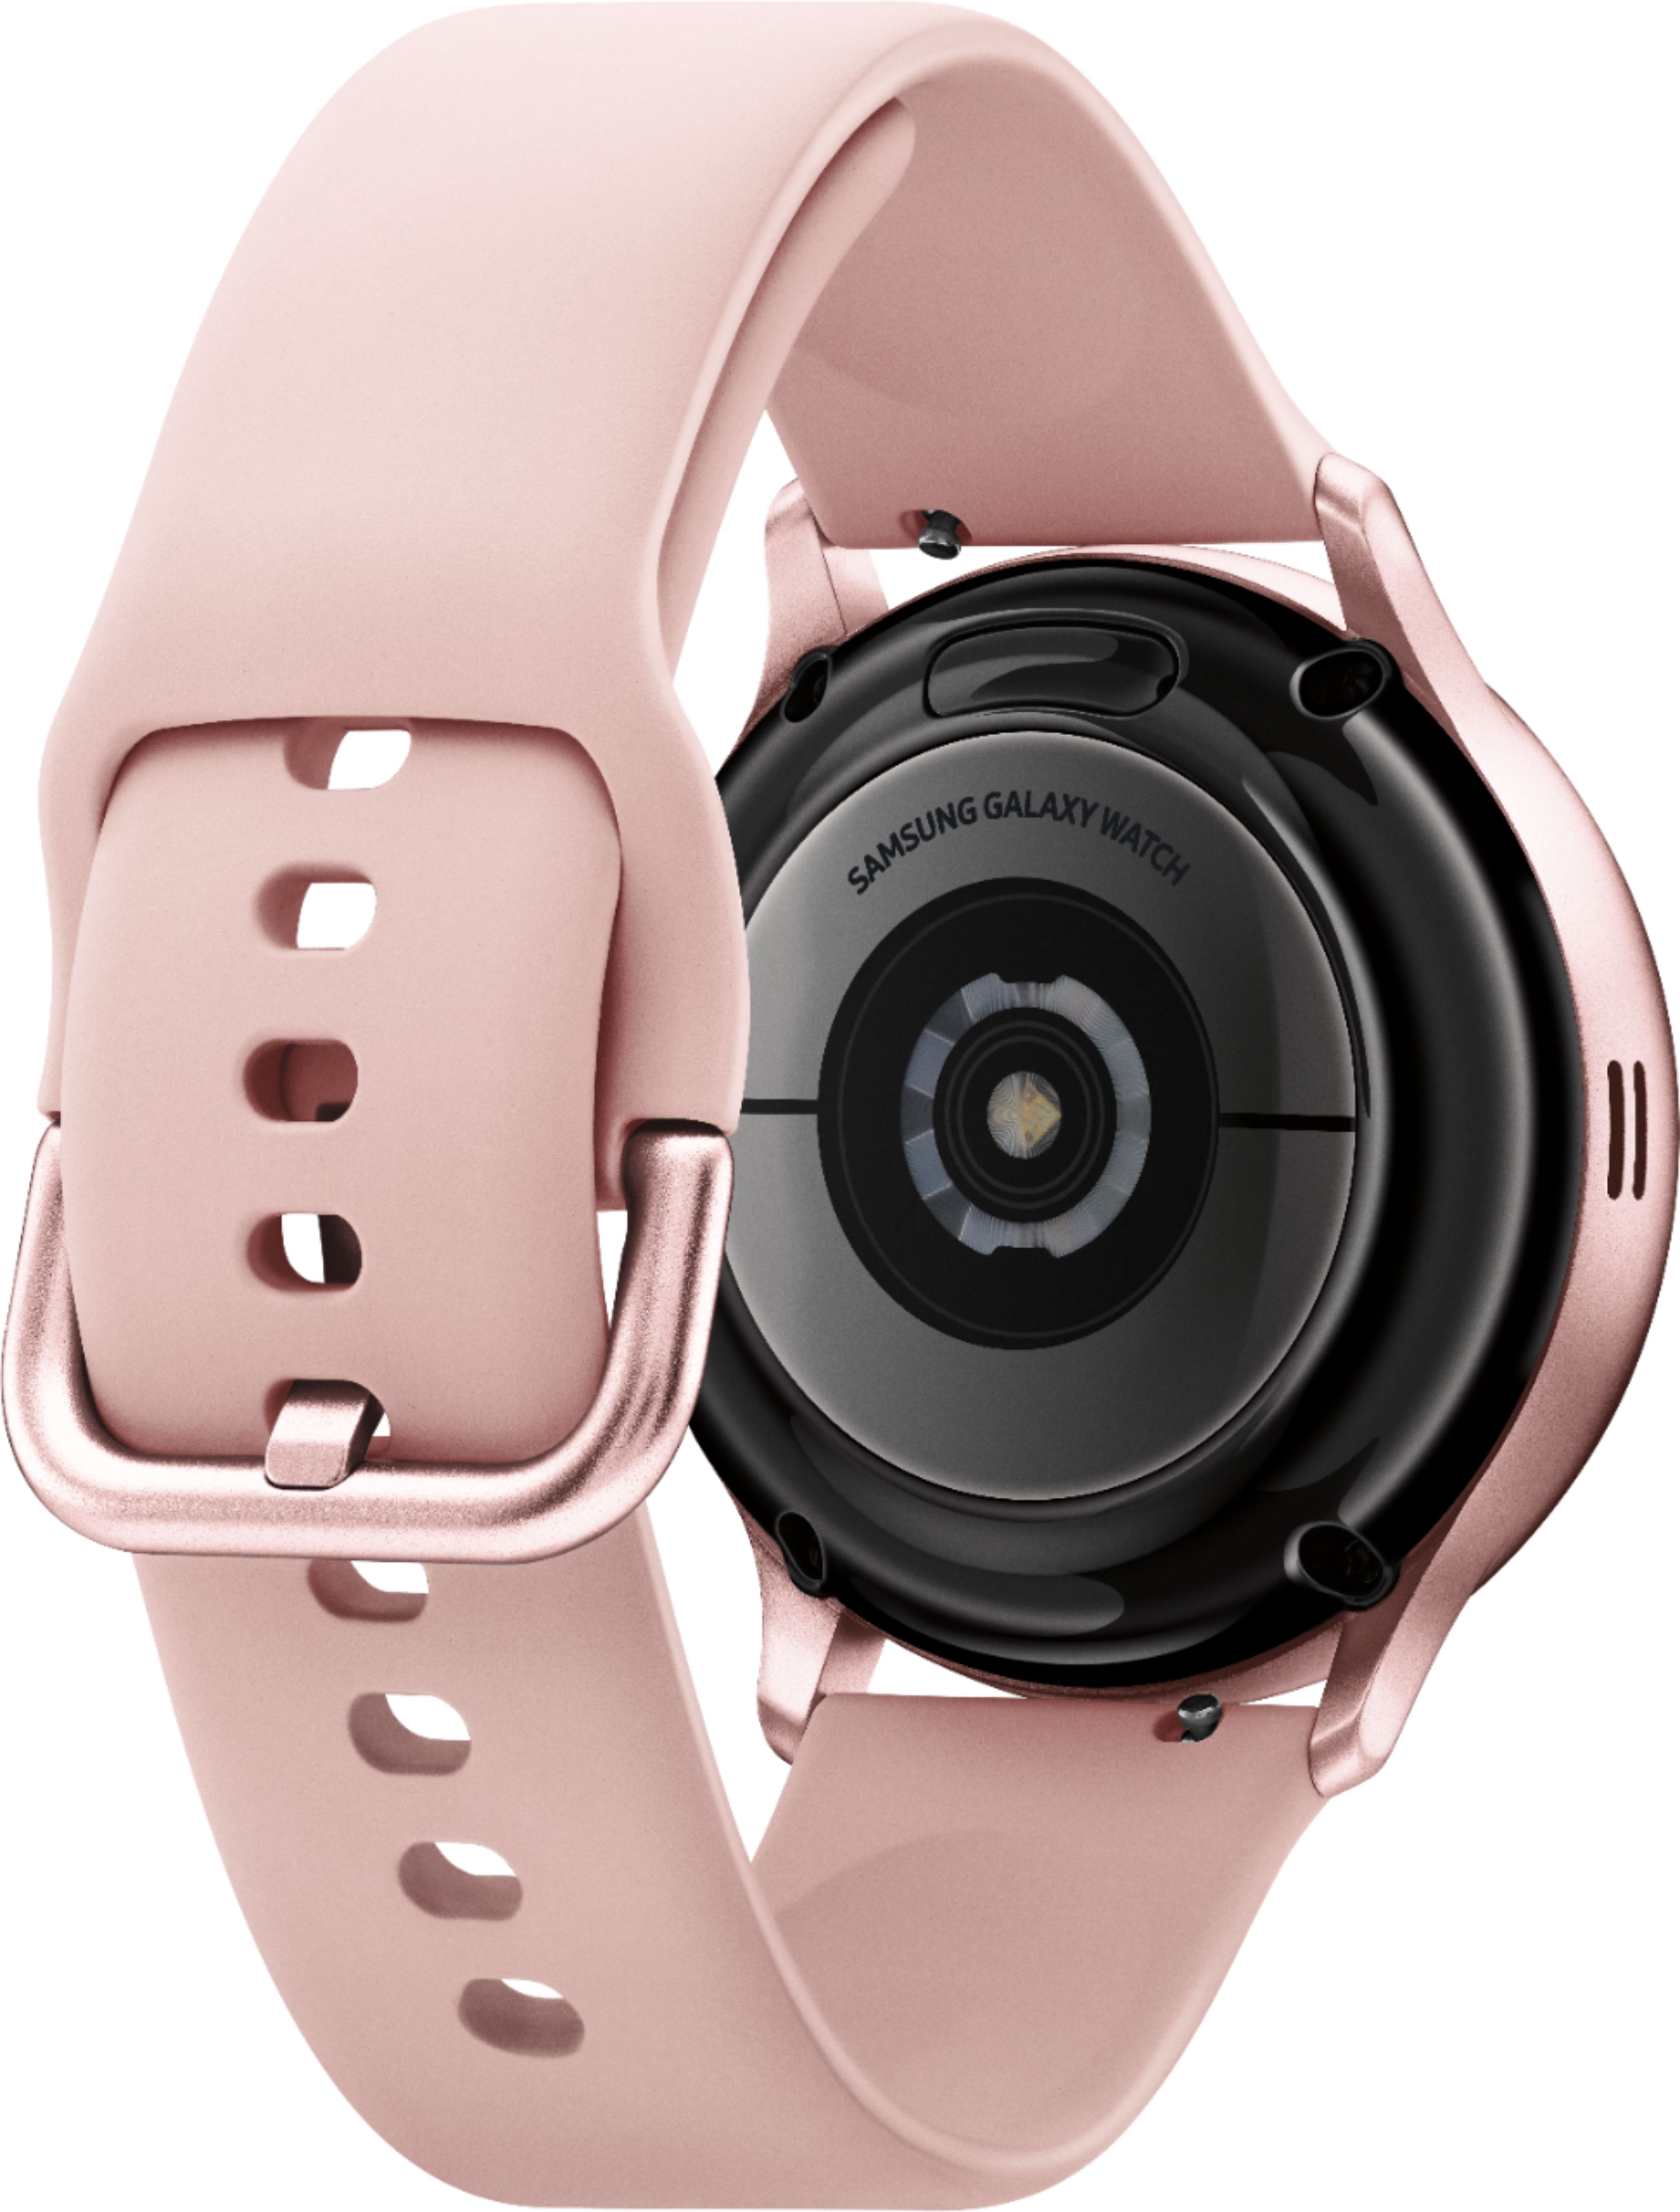 Encyclopedia bladre procedure Best Buy: Samsung Galaxy Watch Active2 Smartwatch 40mm Aluminum Pink Gold  SM-R830NZDAXAR